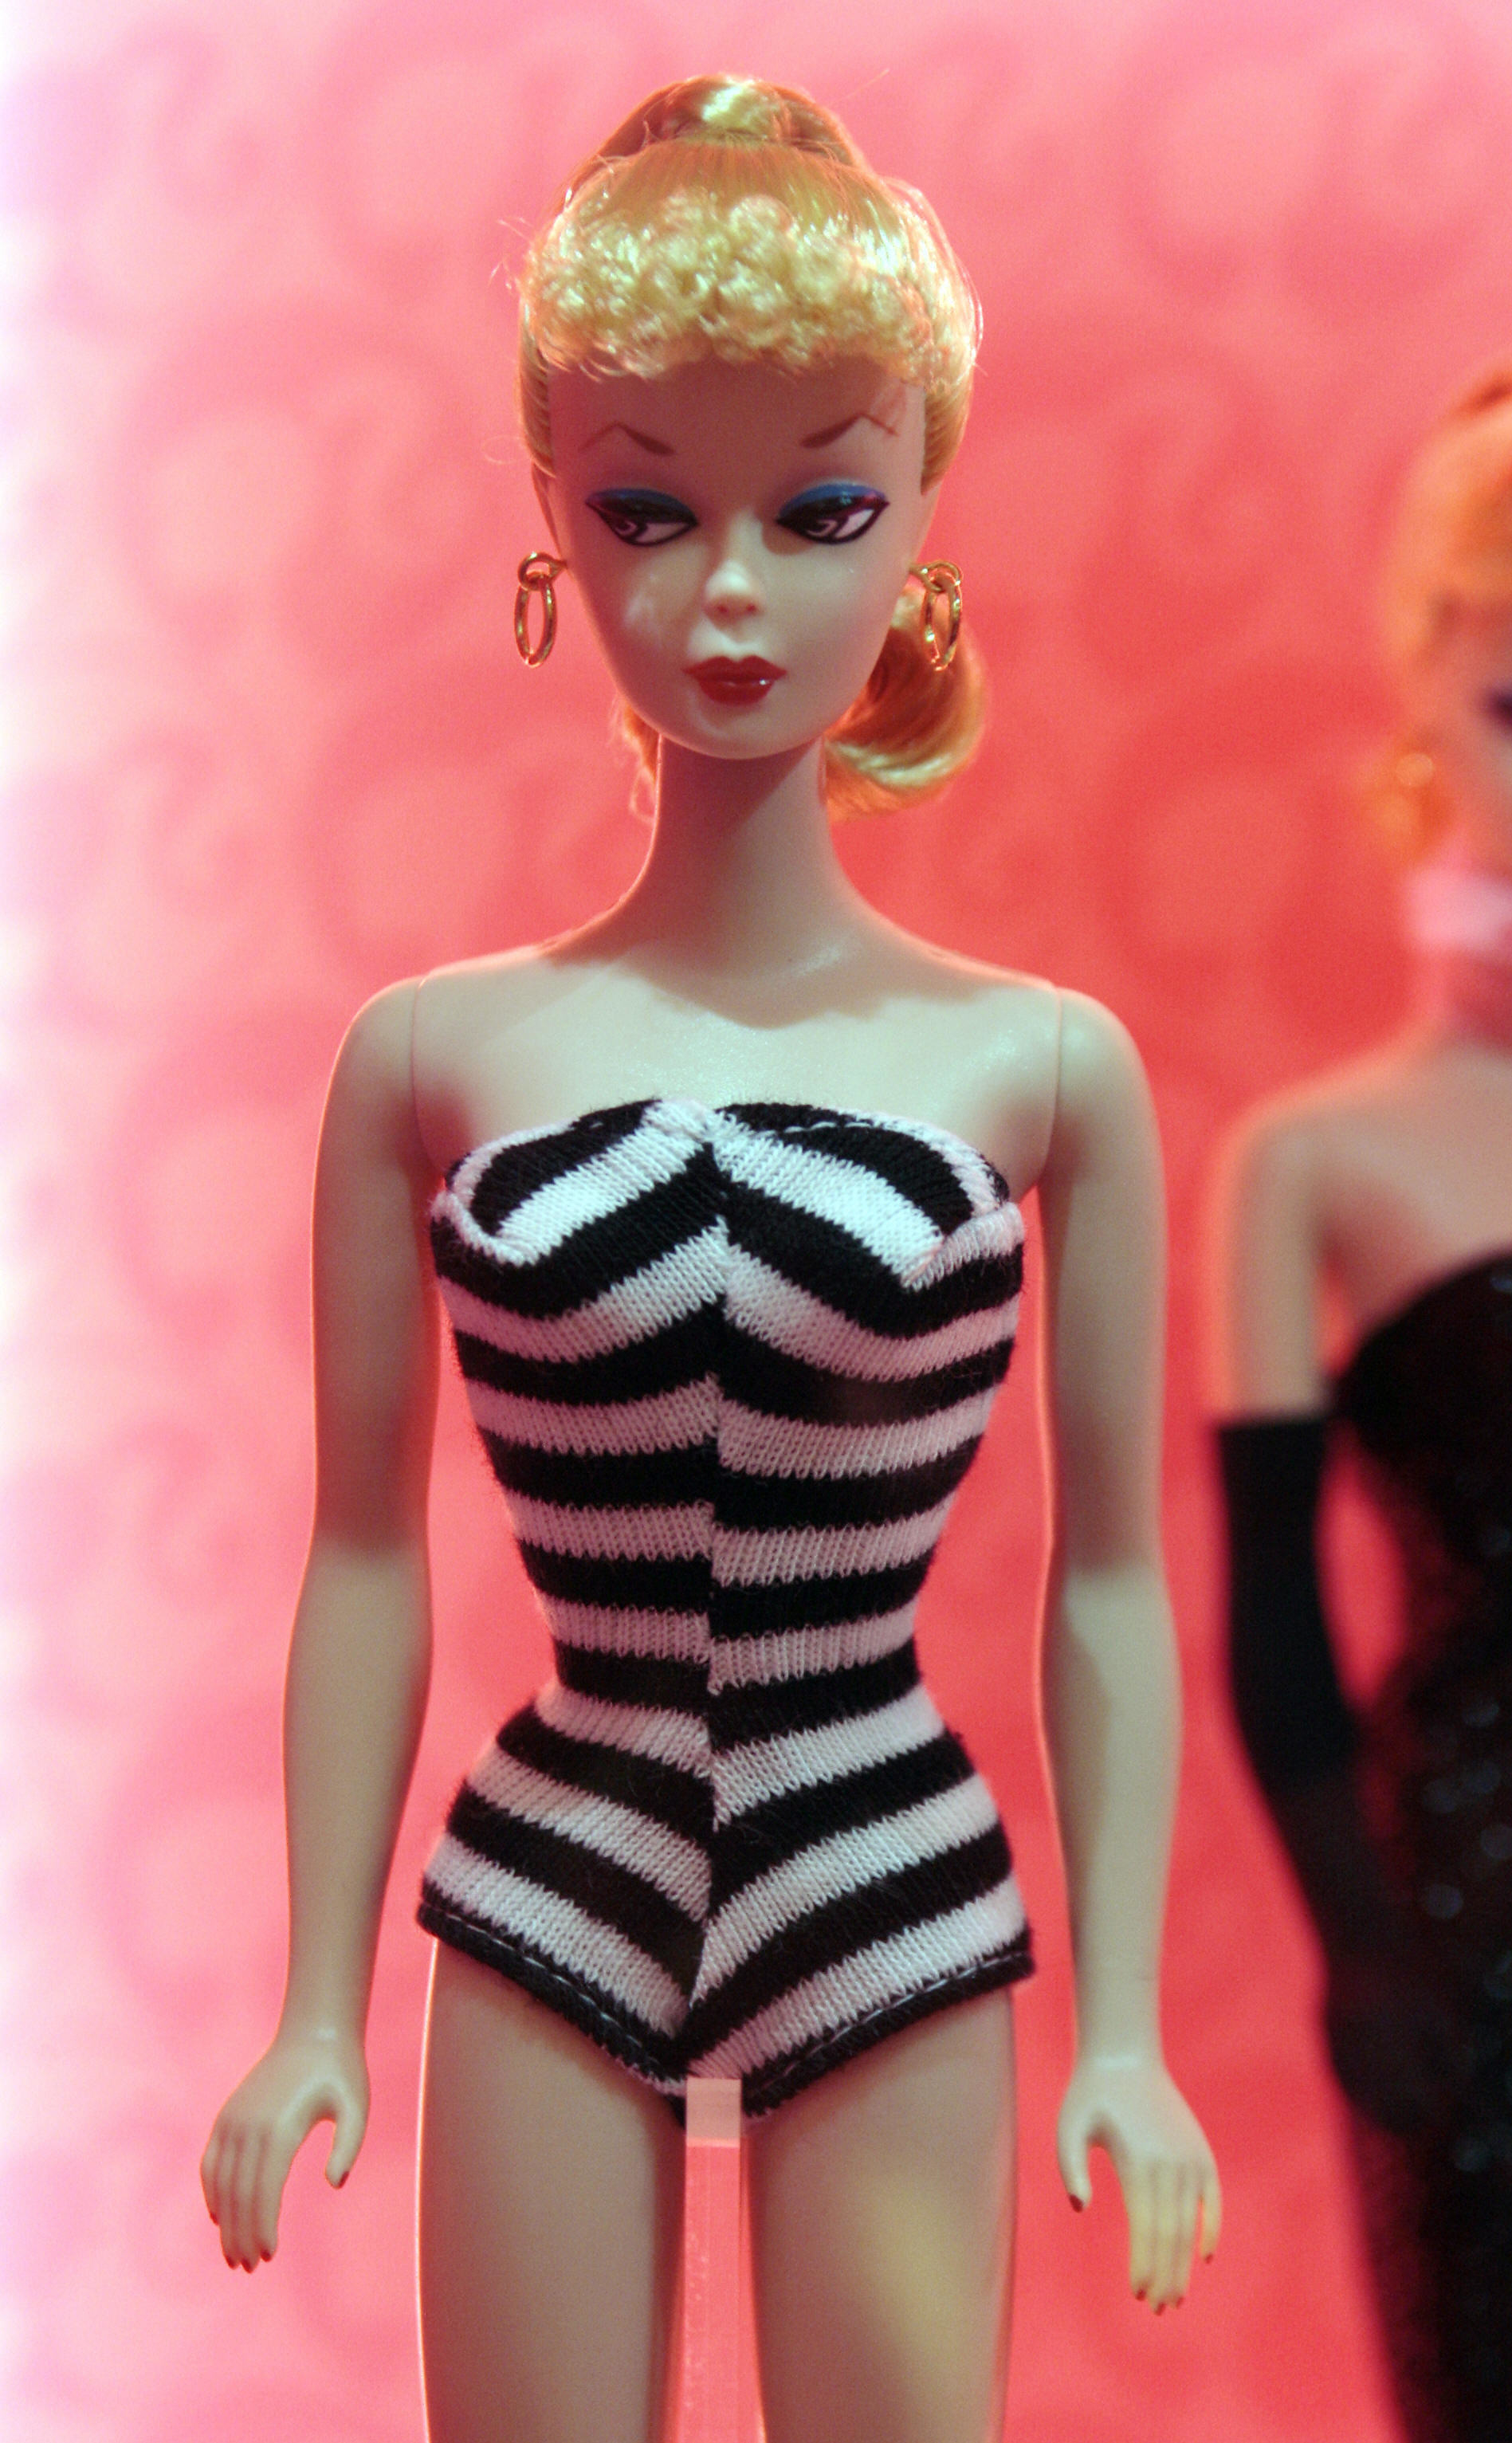 Indvending Swipe vene Barbie Ruth Handler Real Life Facts